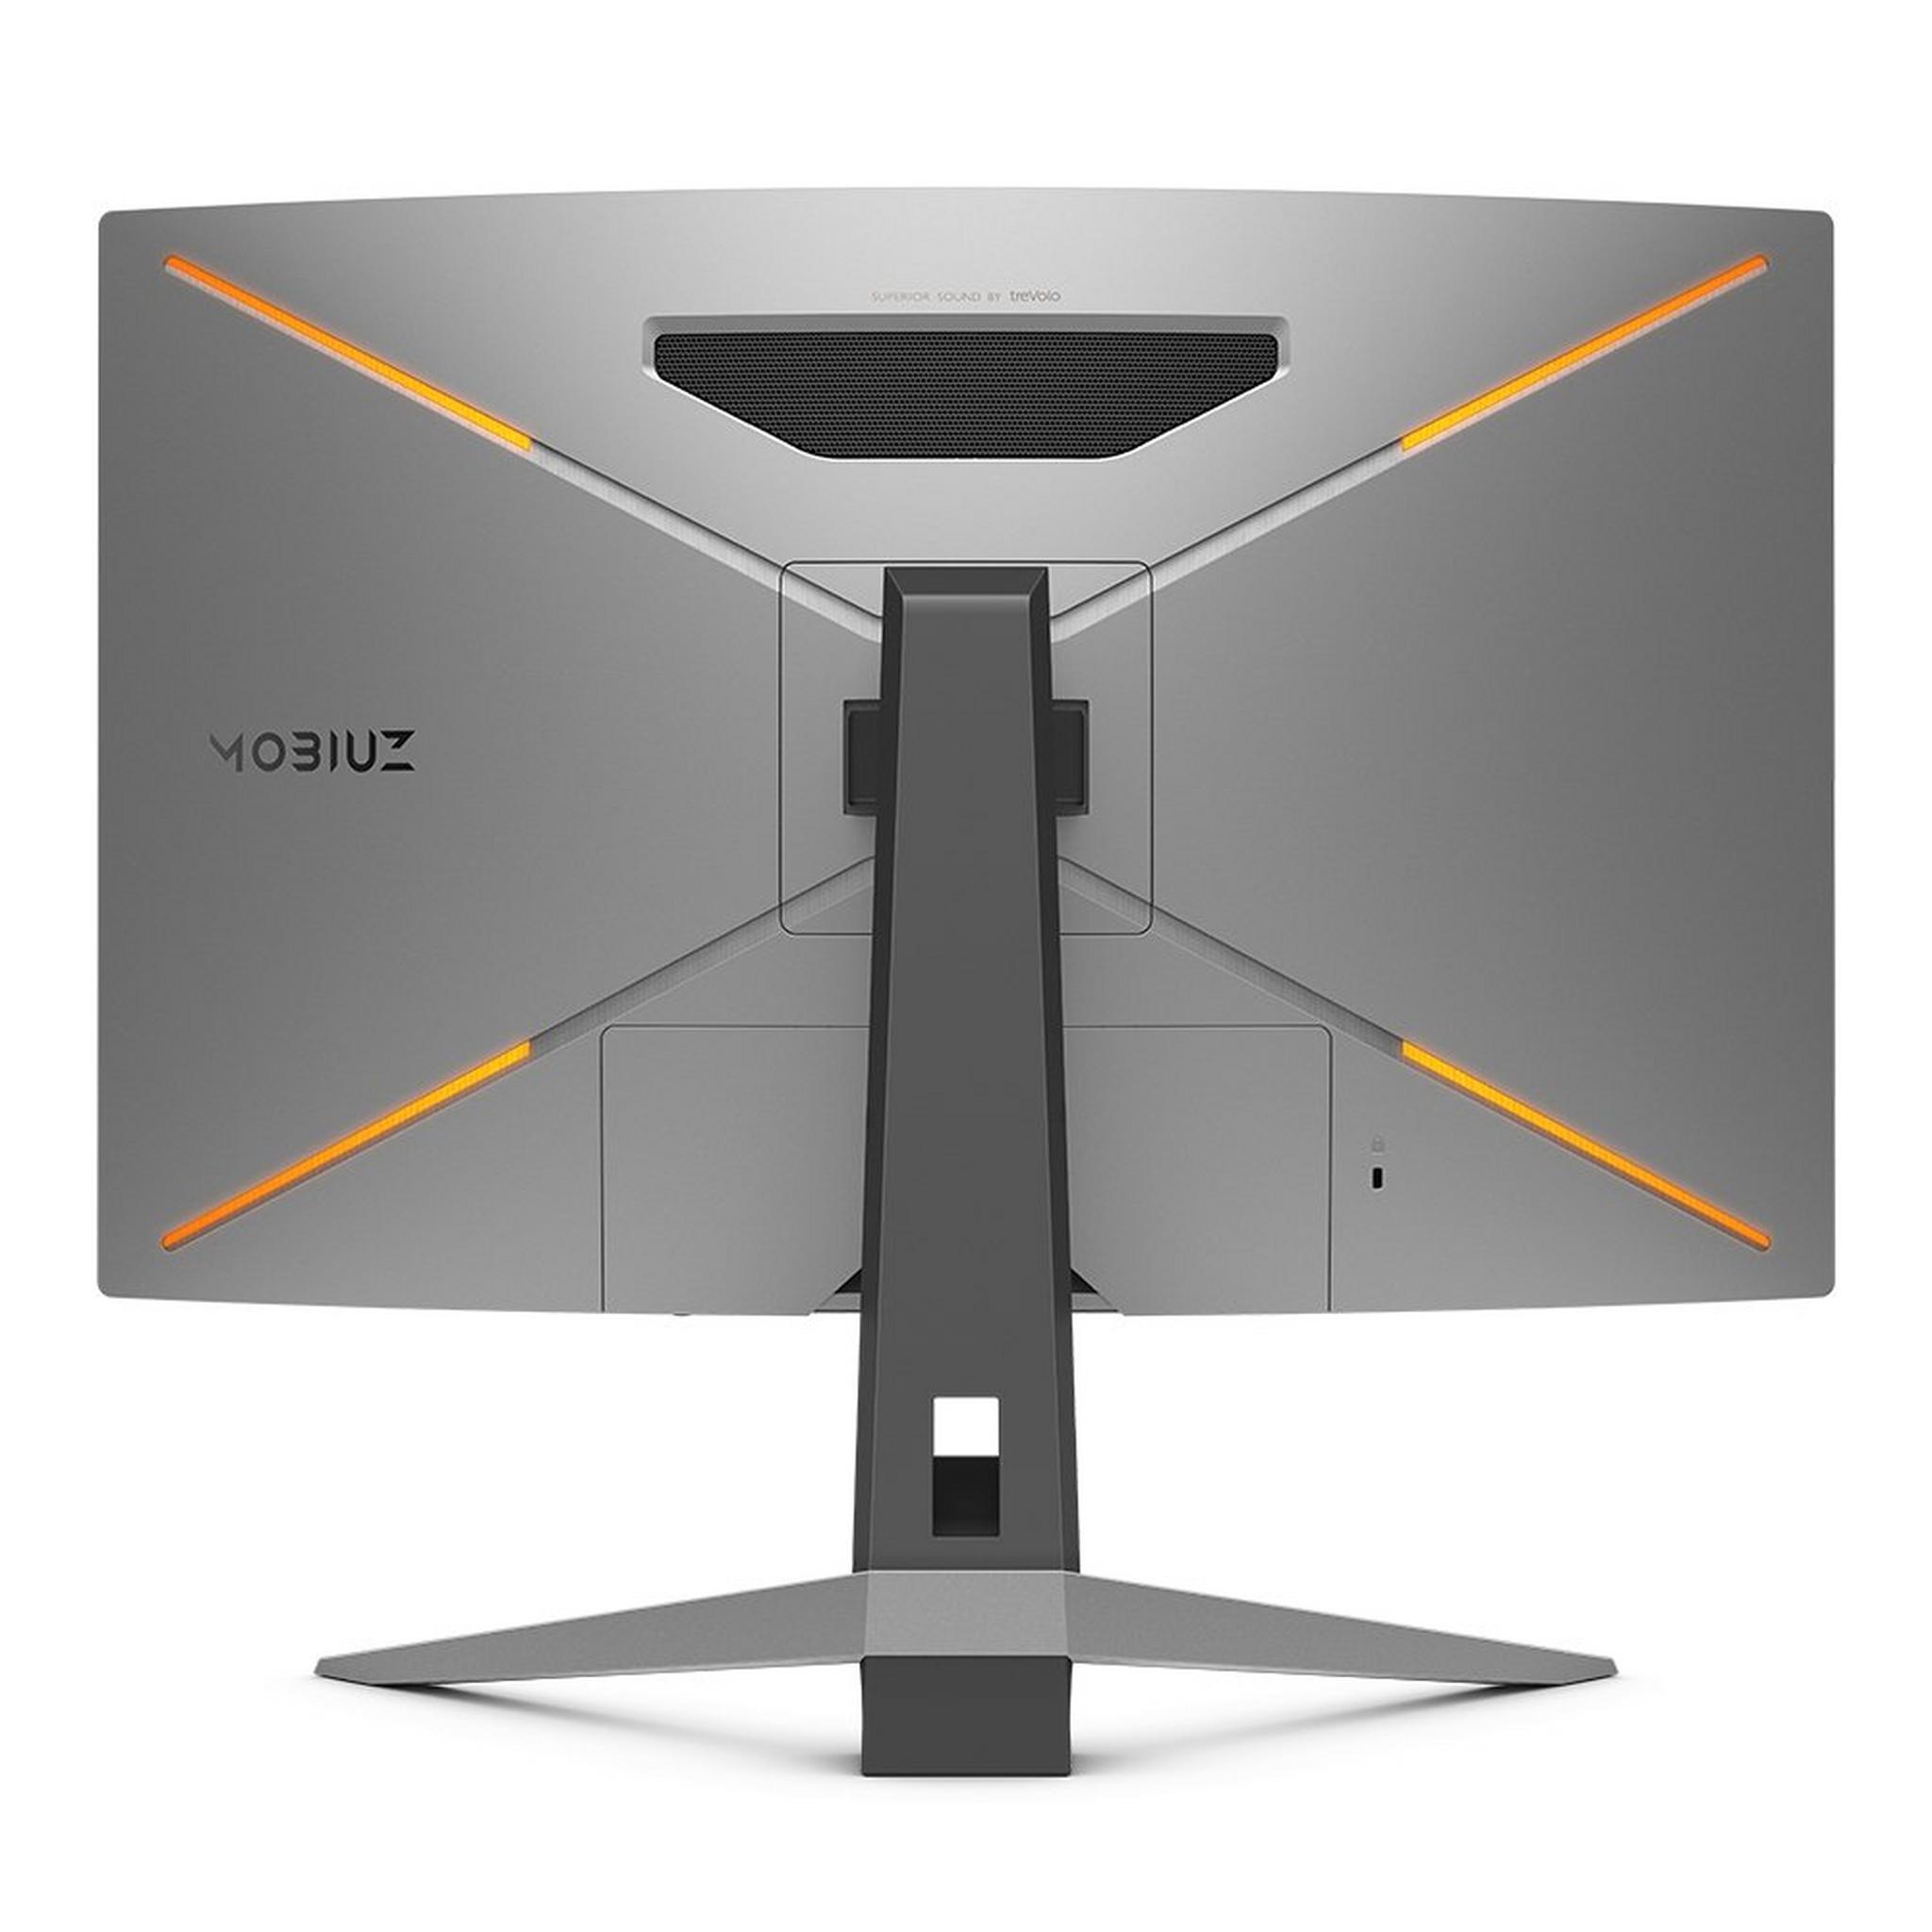 BenQ 27-inch LED QHD Curved Gaming Monitor - Grey